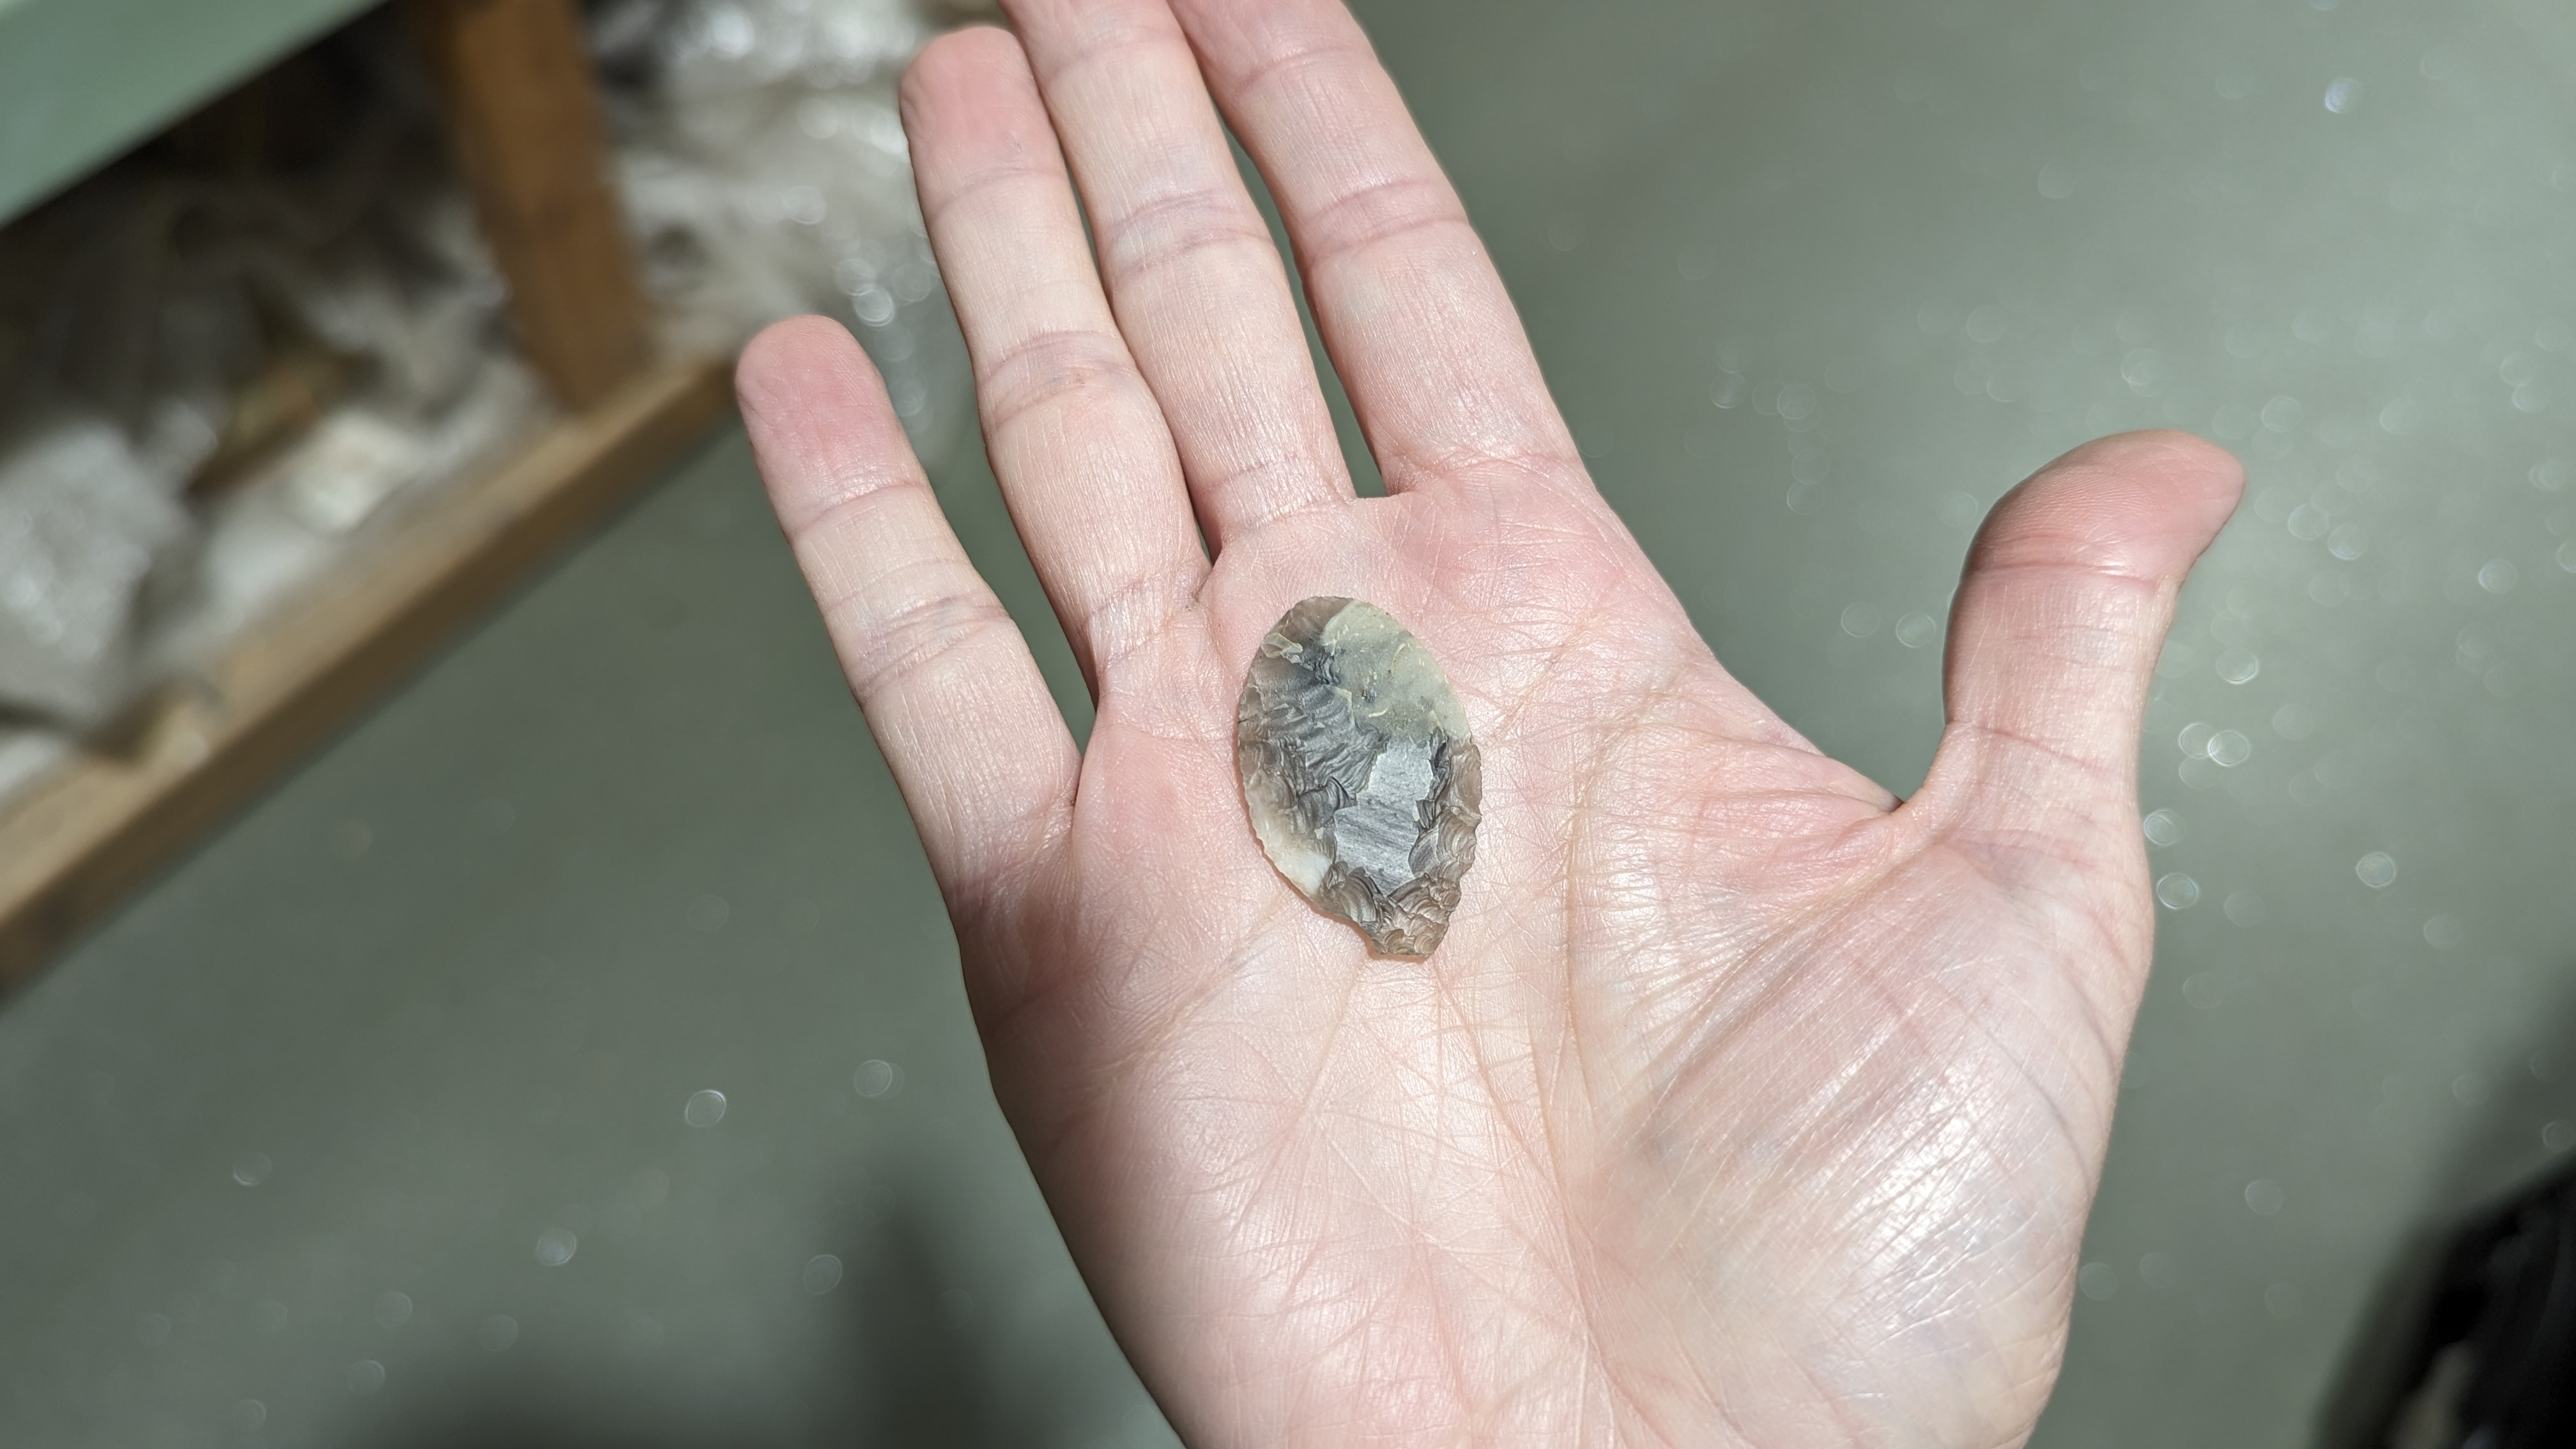 Grey, flint arrowhead held in the palm of a hand.